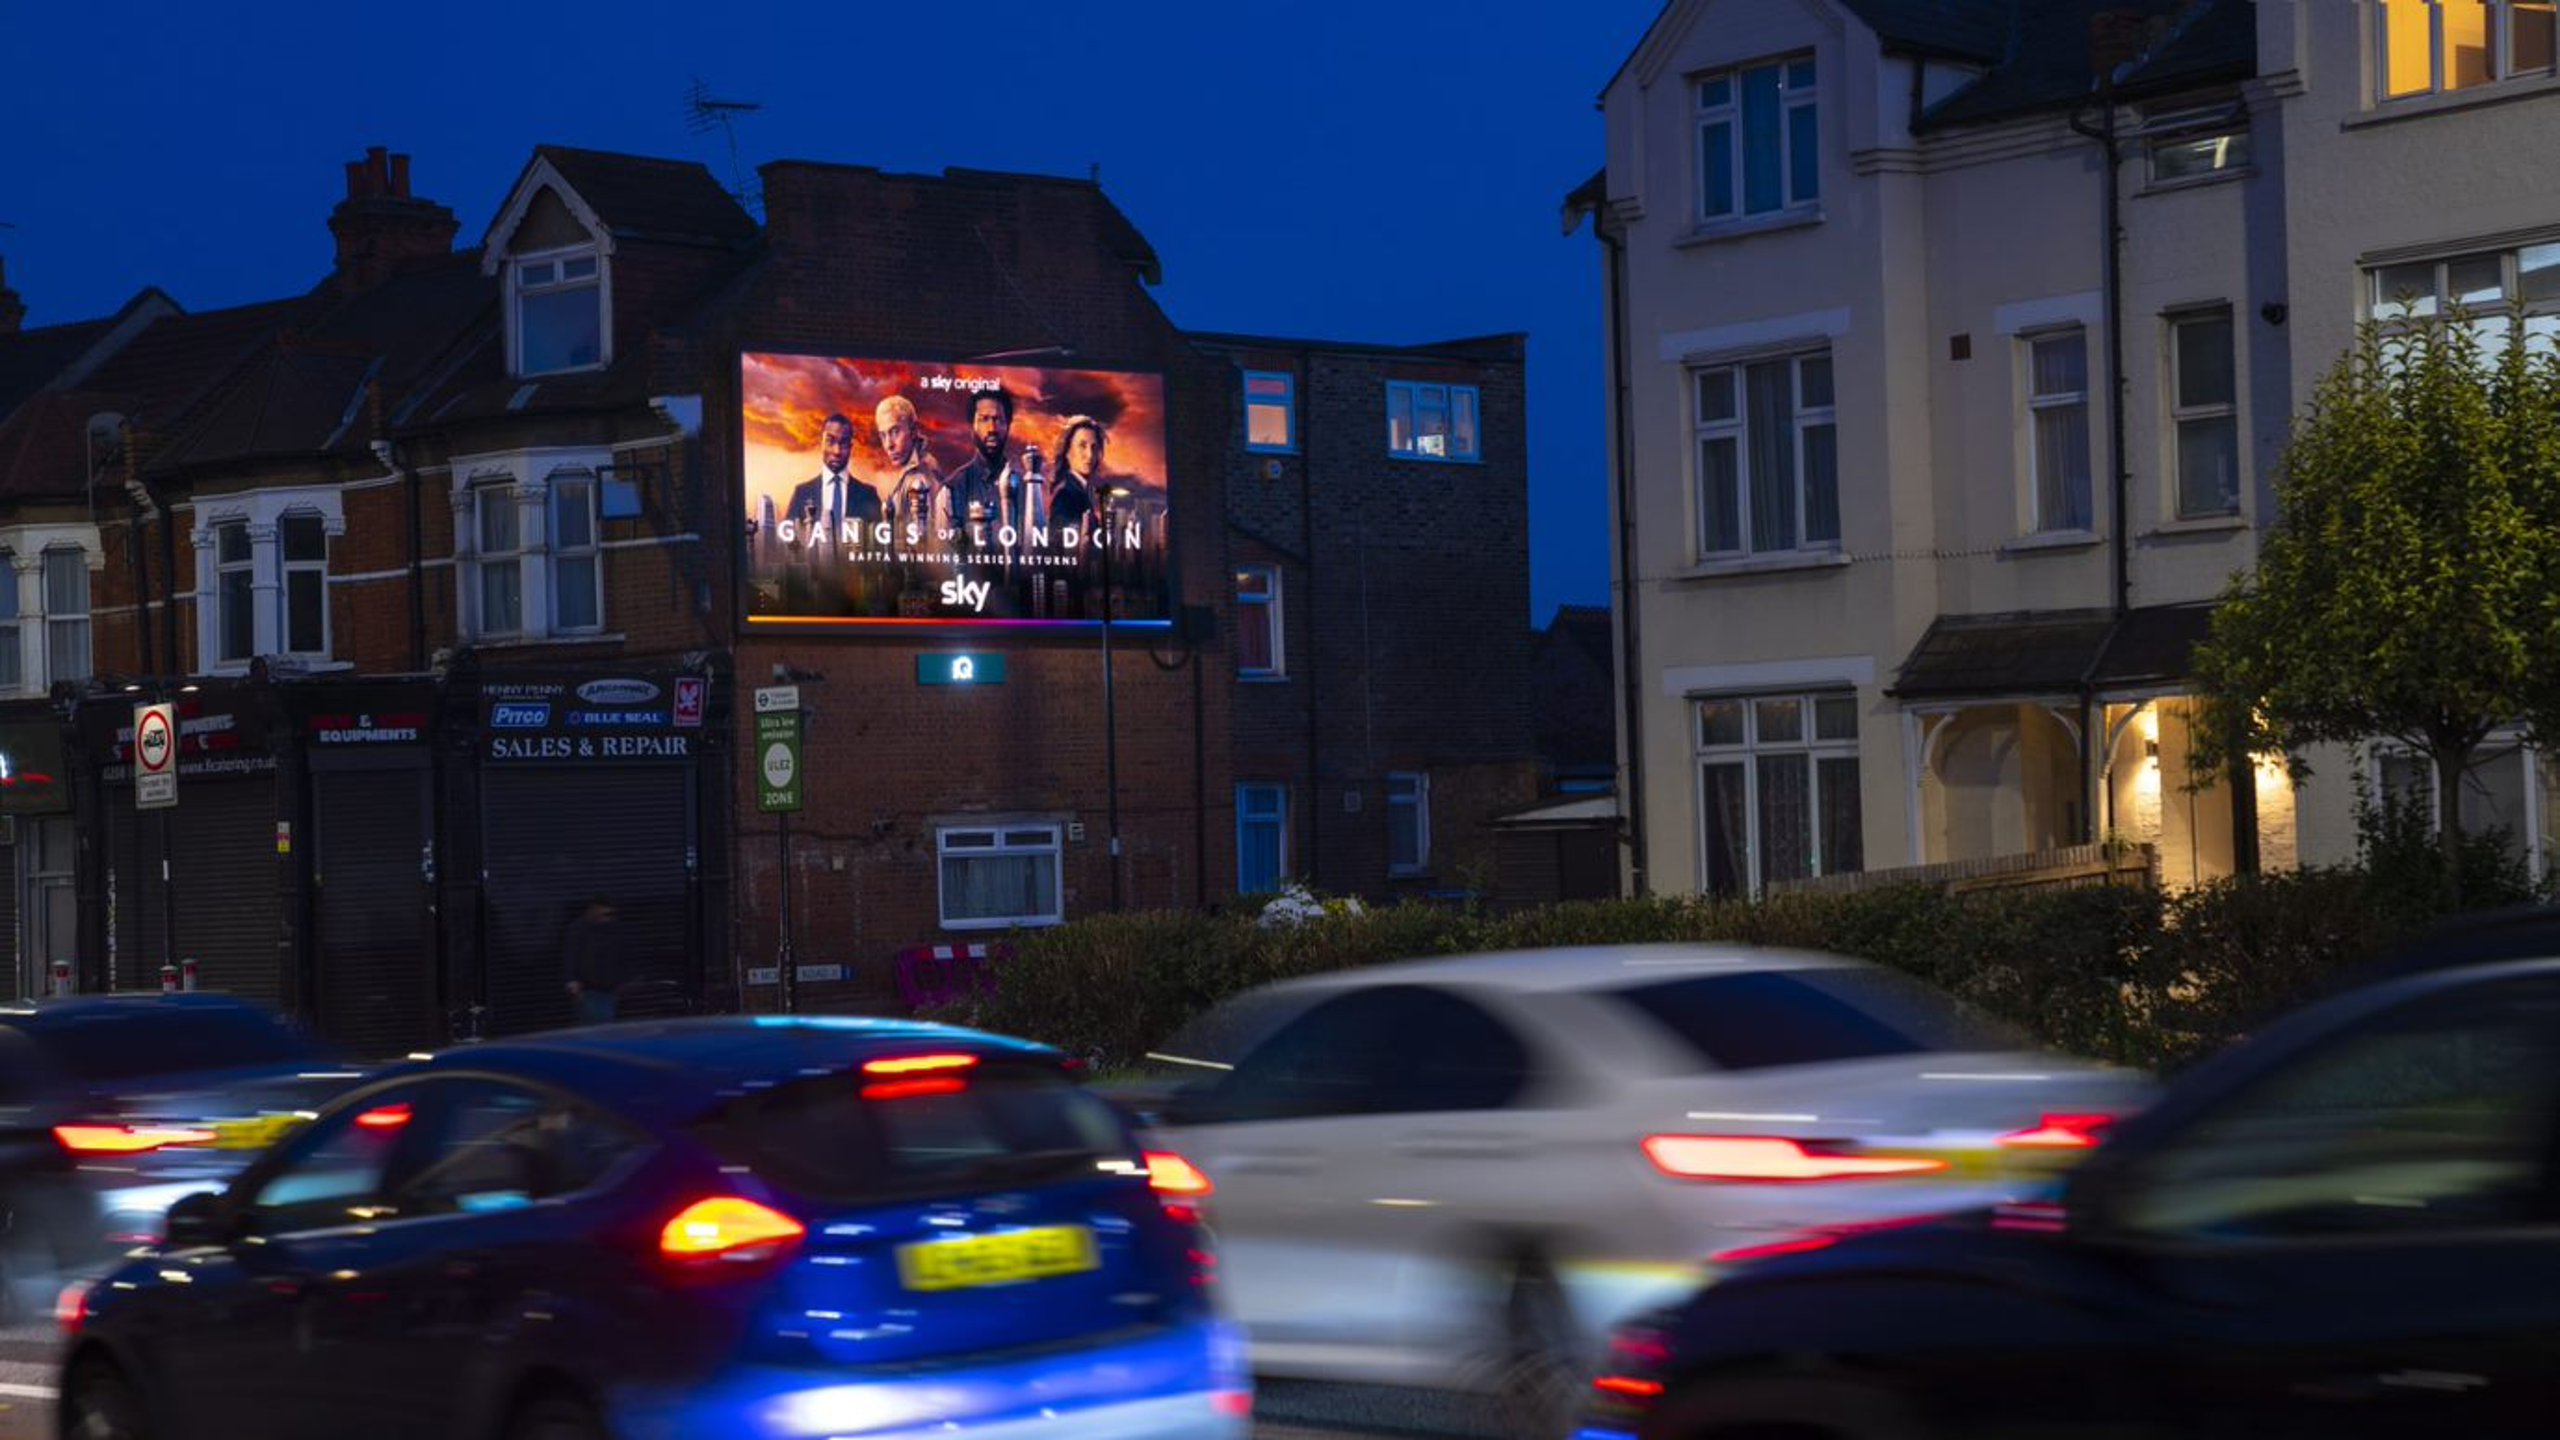 gangs of London digital screen advertisement infront of traffic